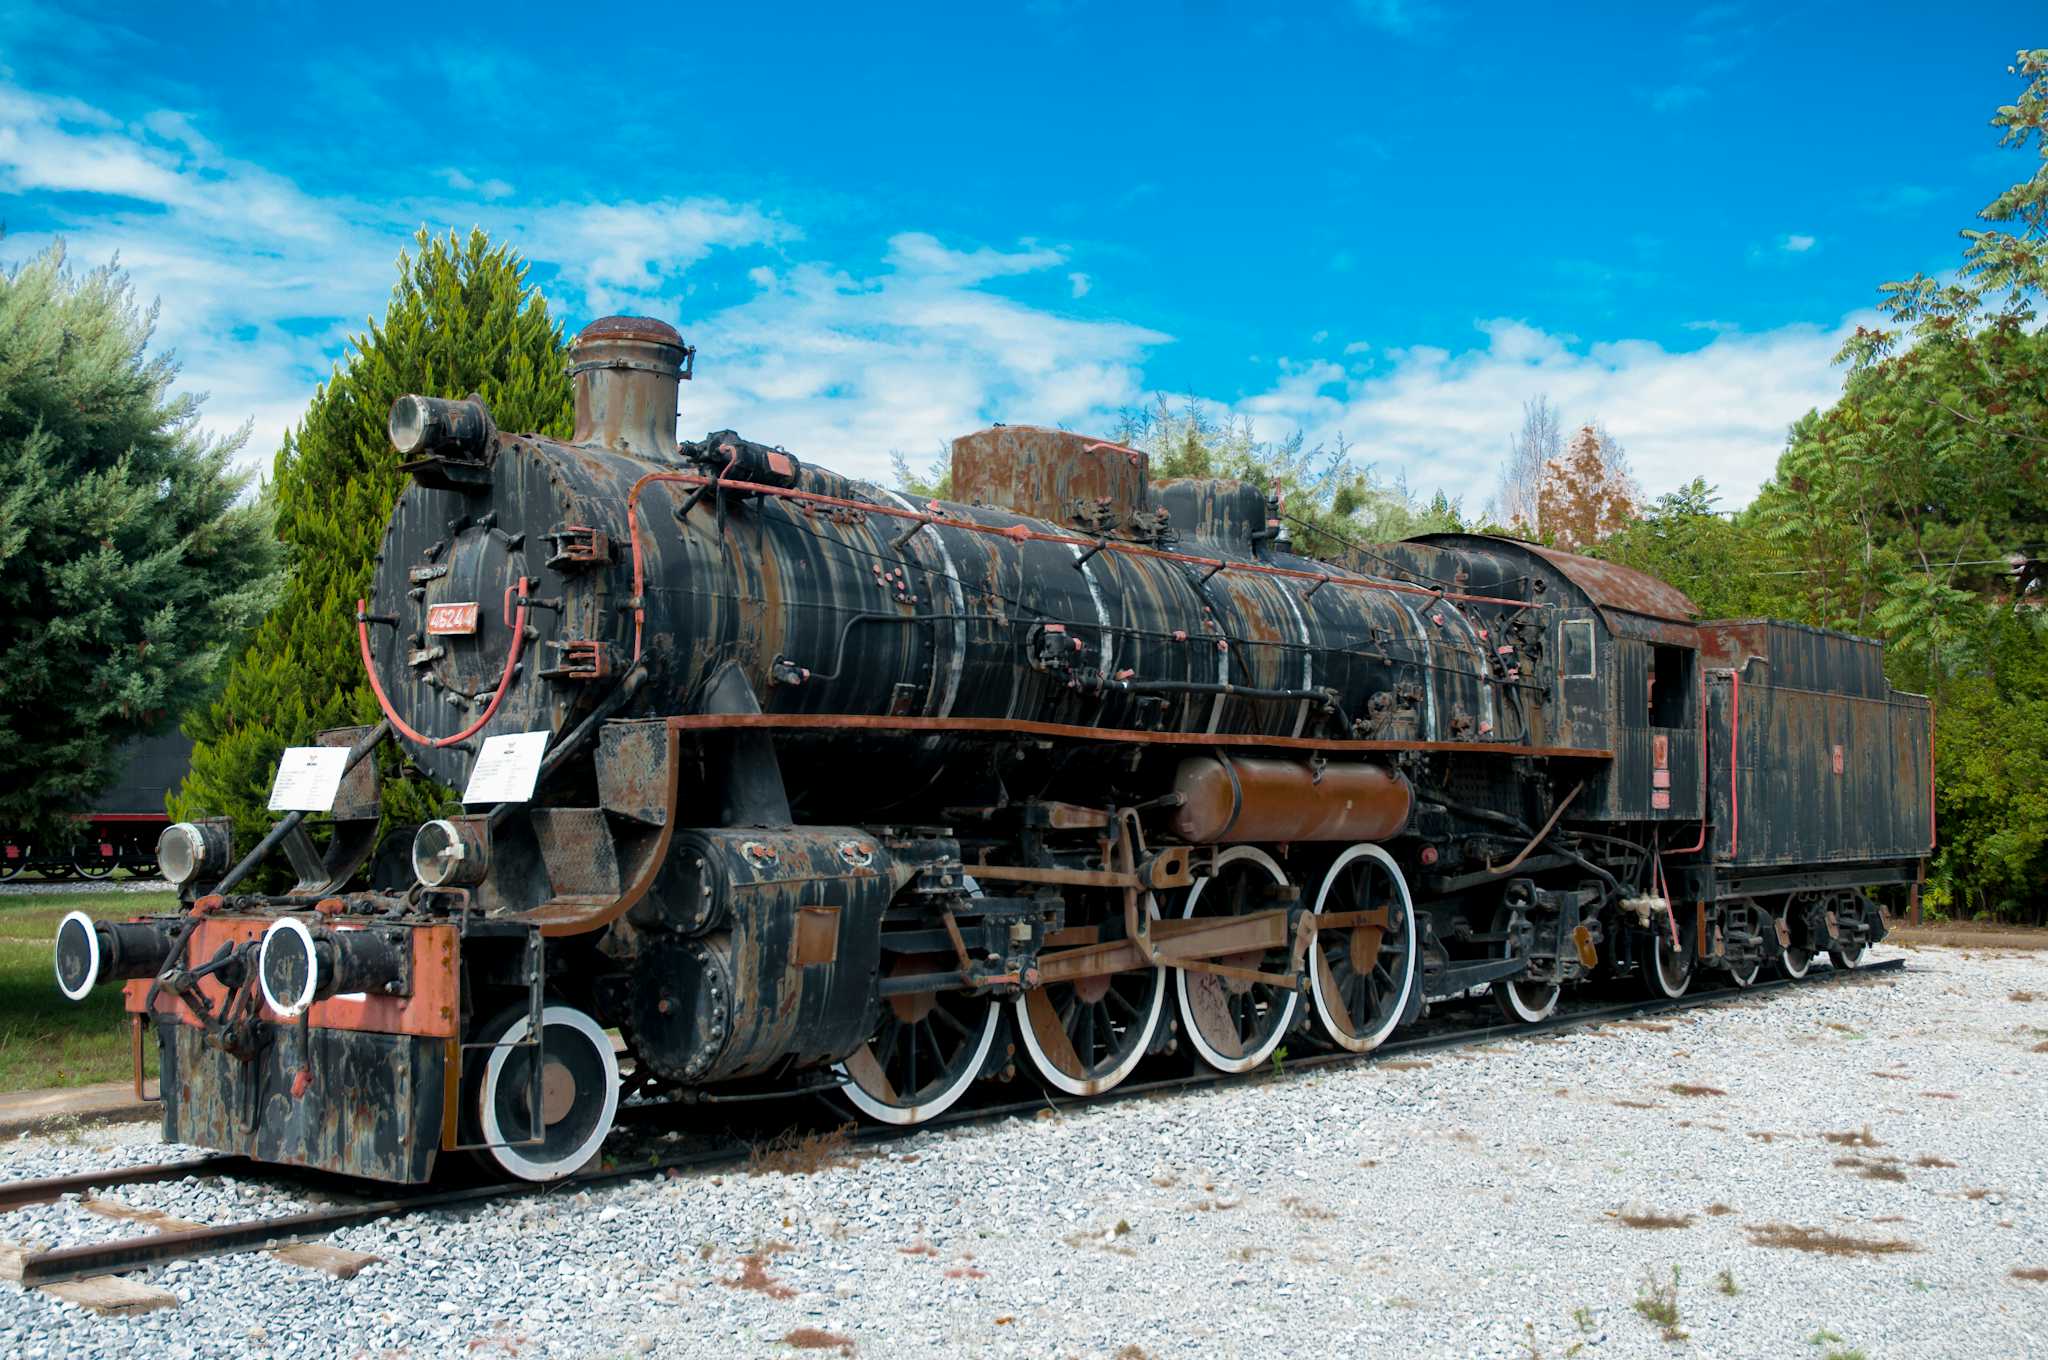 Camlik Museum of Steam Locomotives